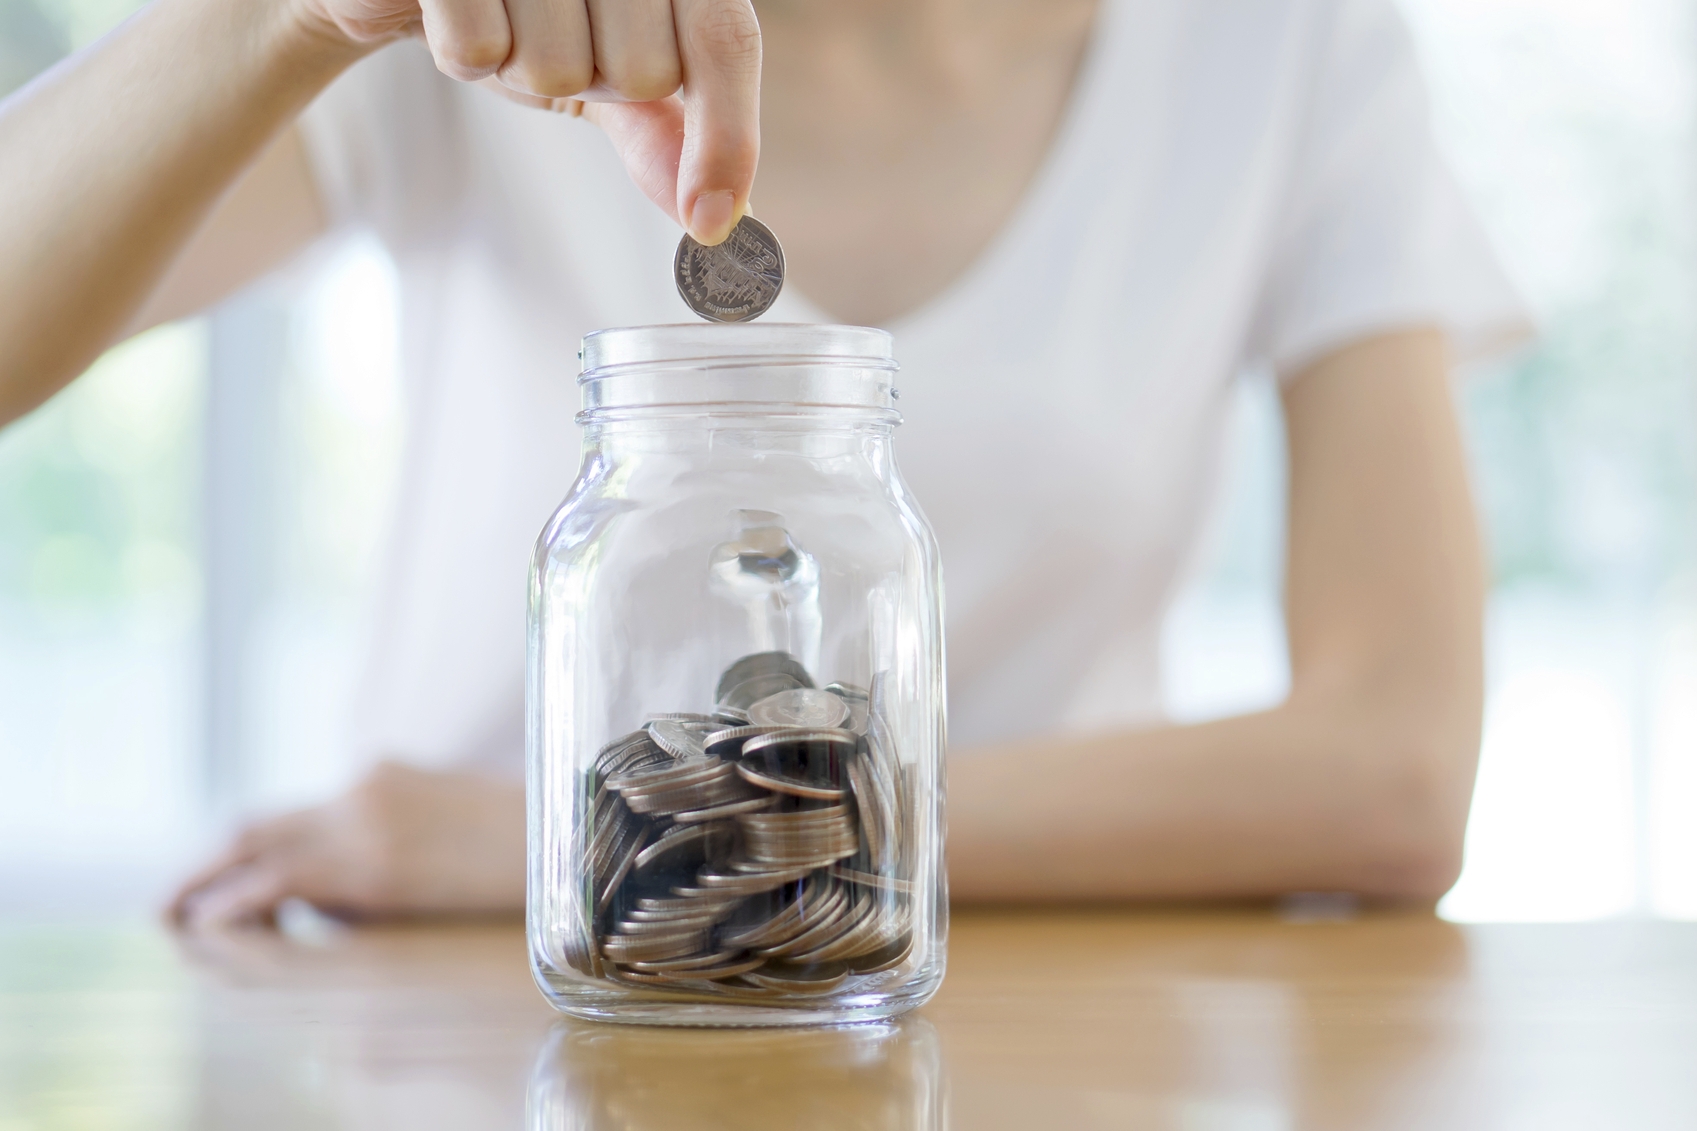 woman saving coins into a jar, saving money